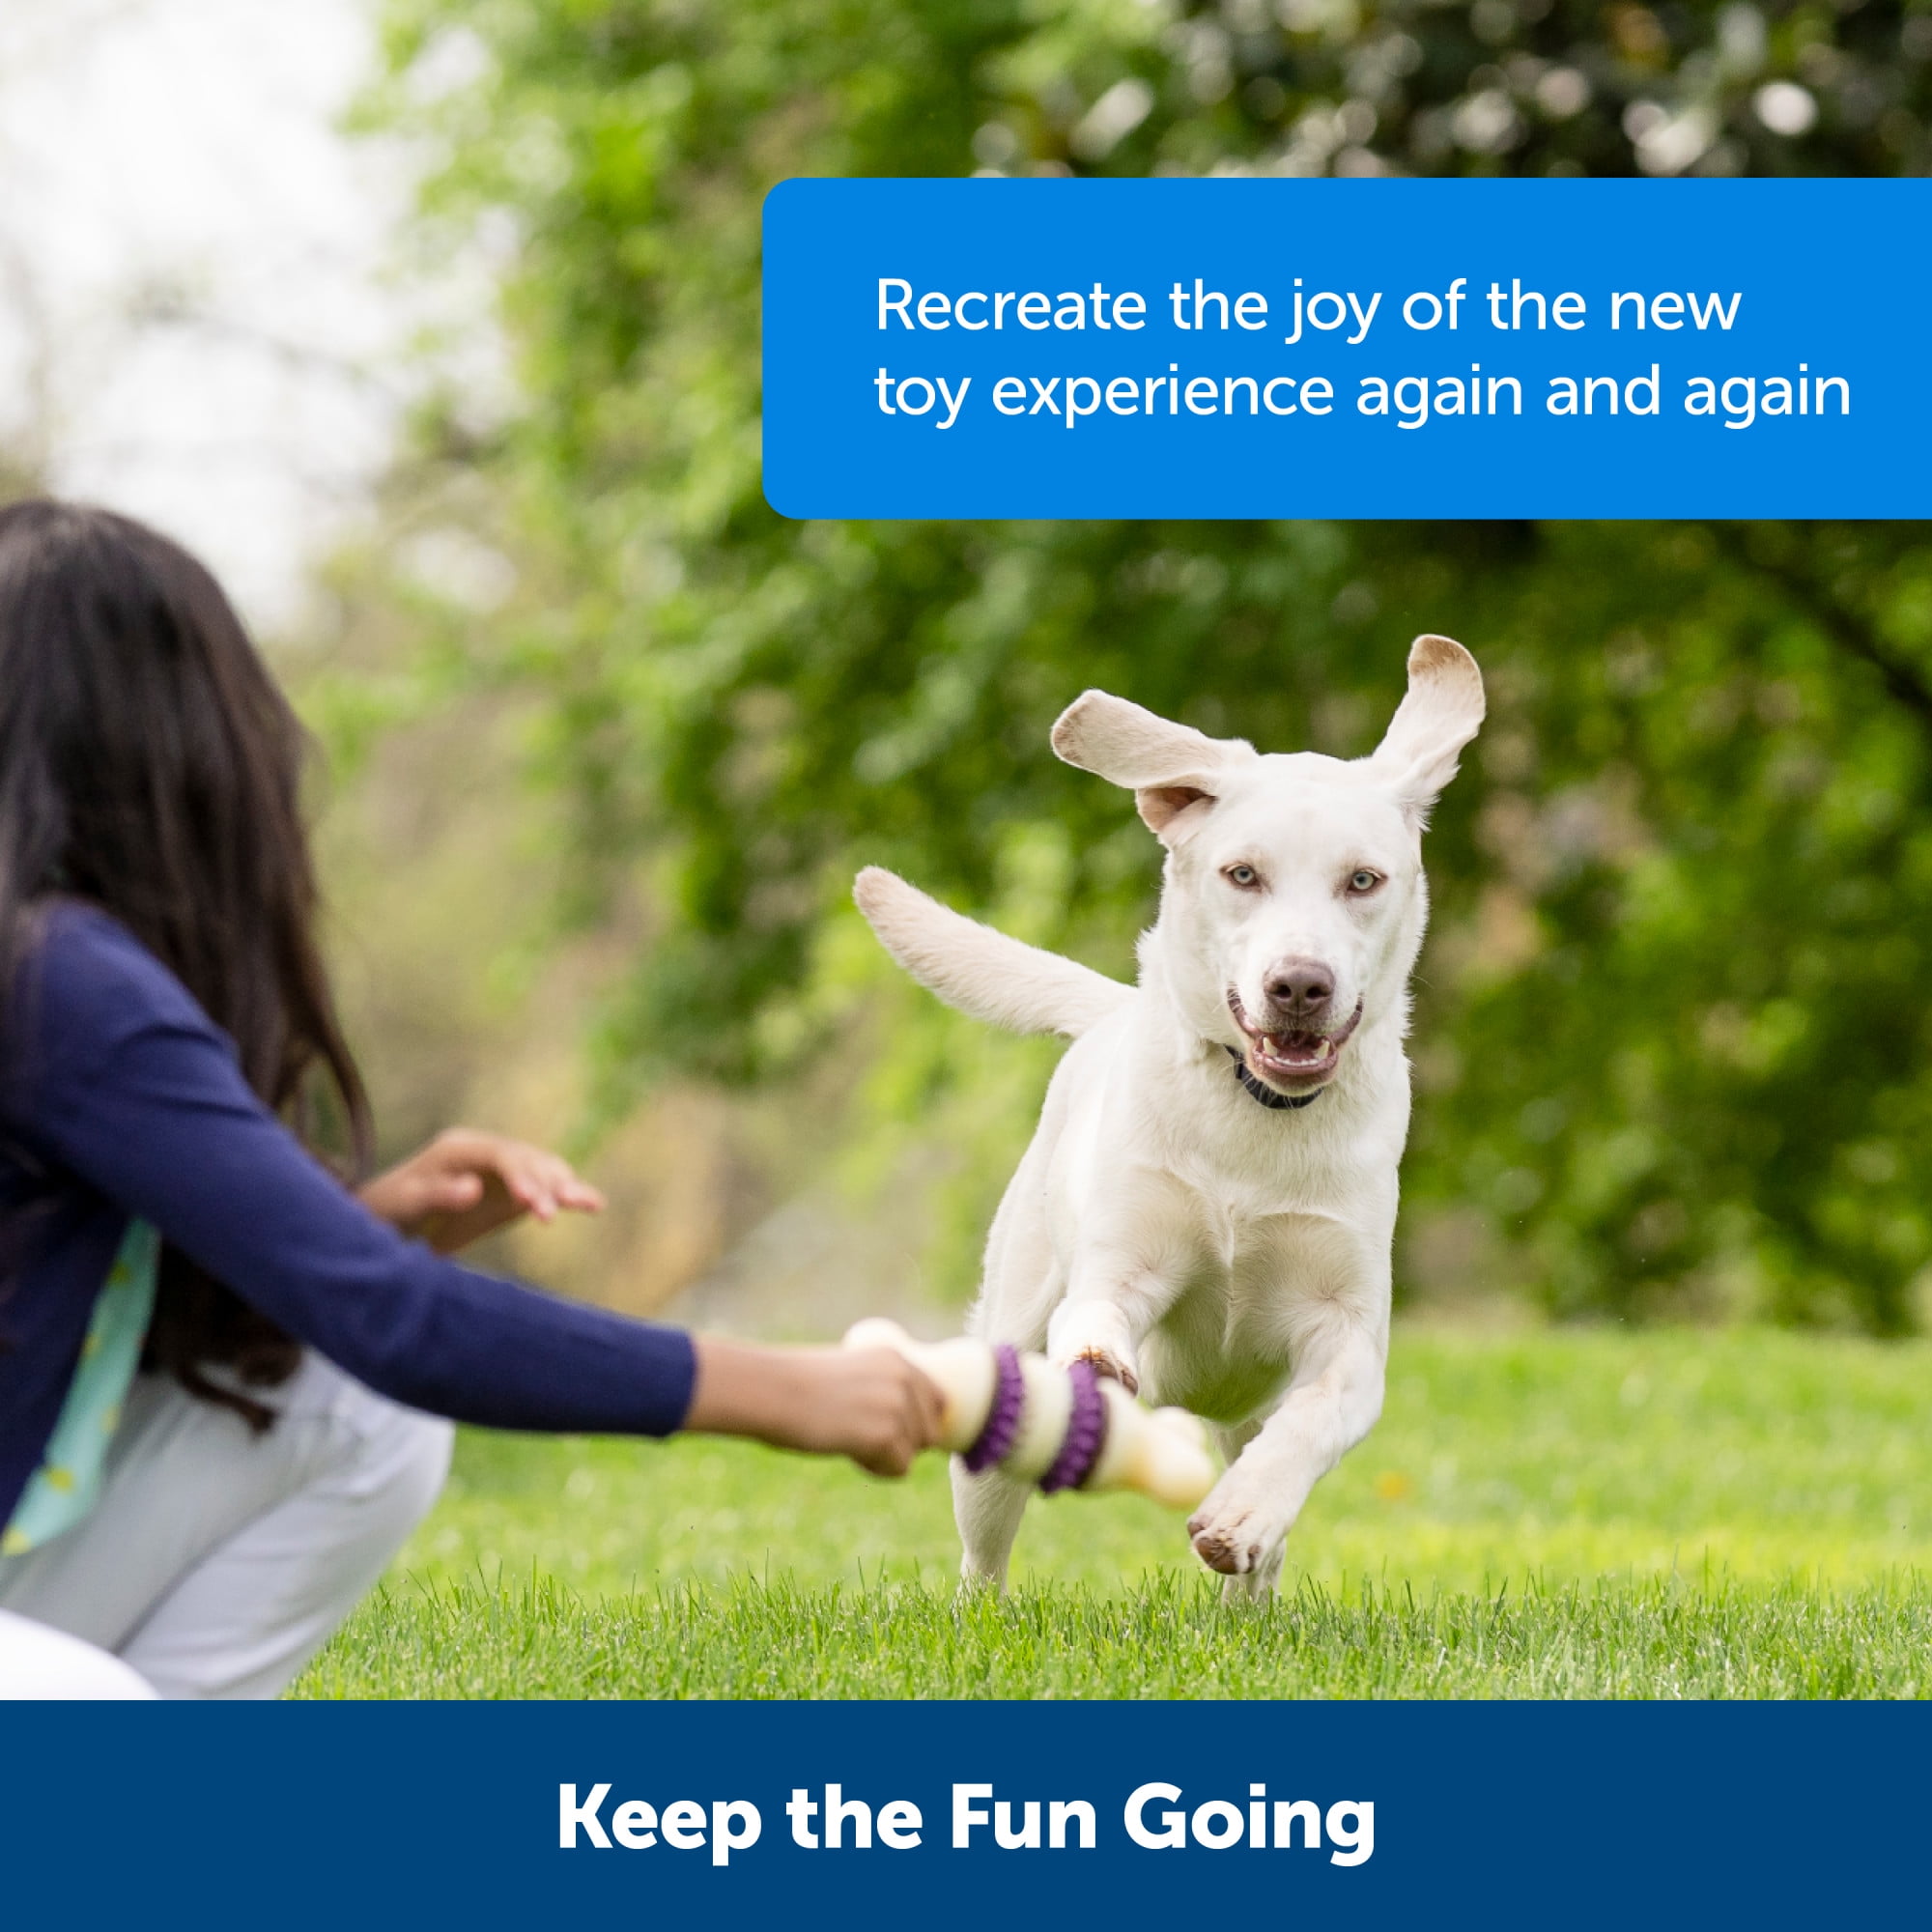 PetSafe Busy Buddy Cravin' Corncob Dog Toy – Treat Ring Holding